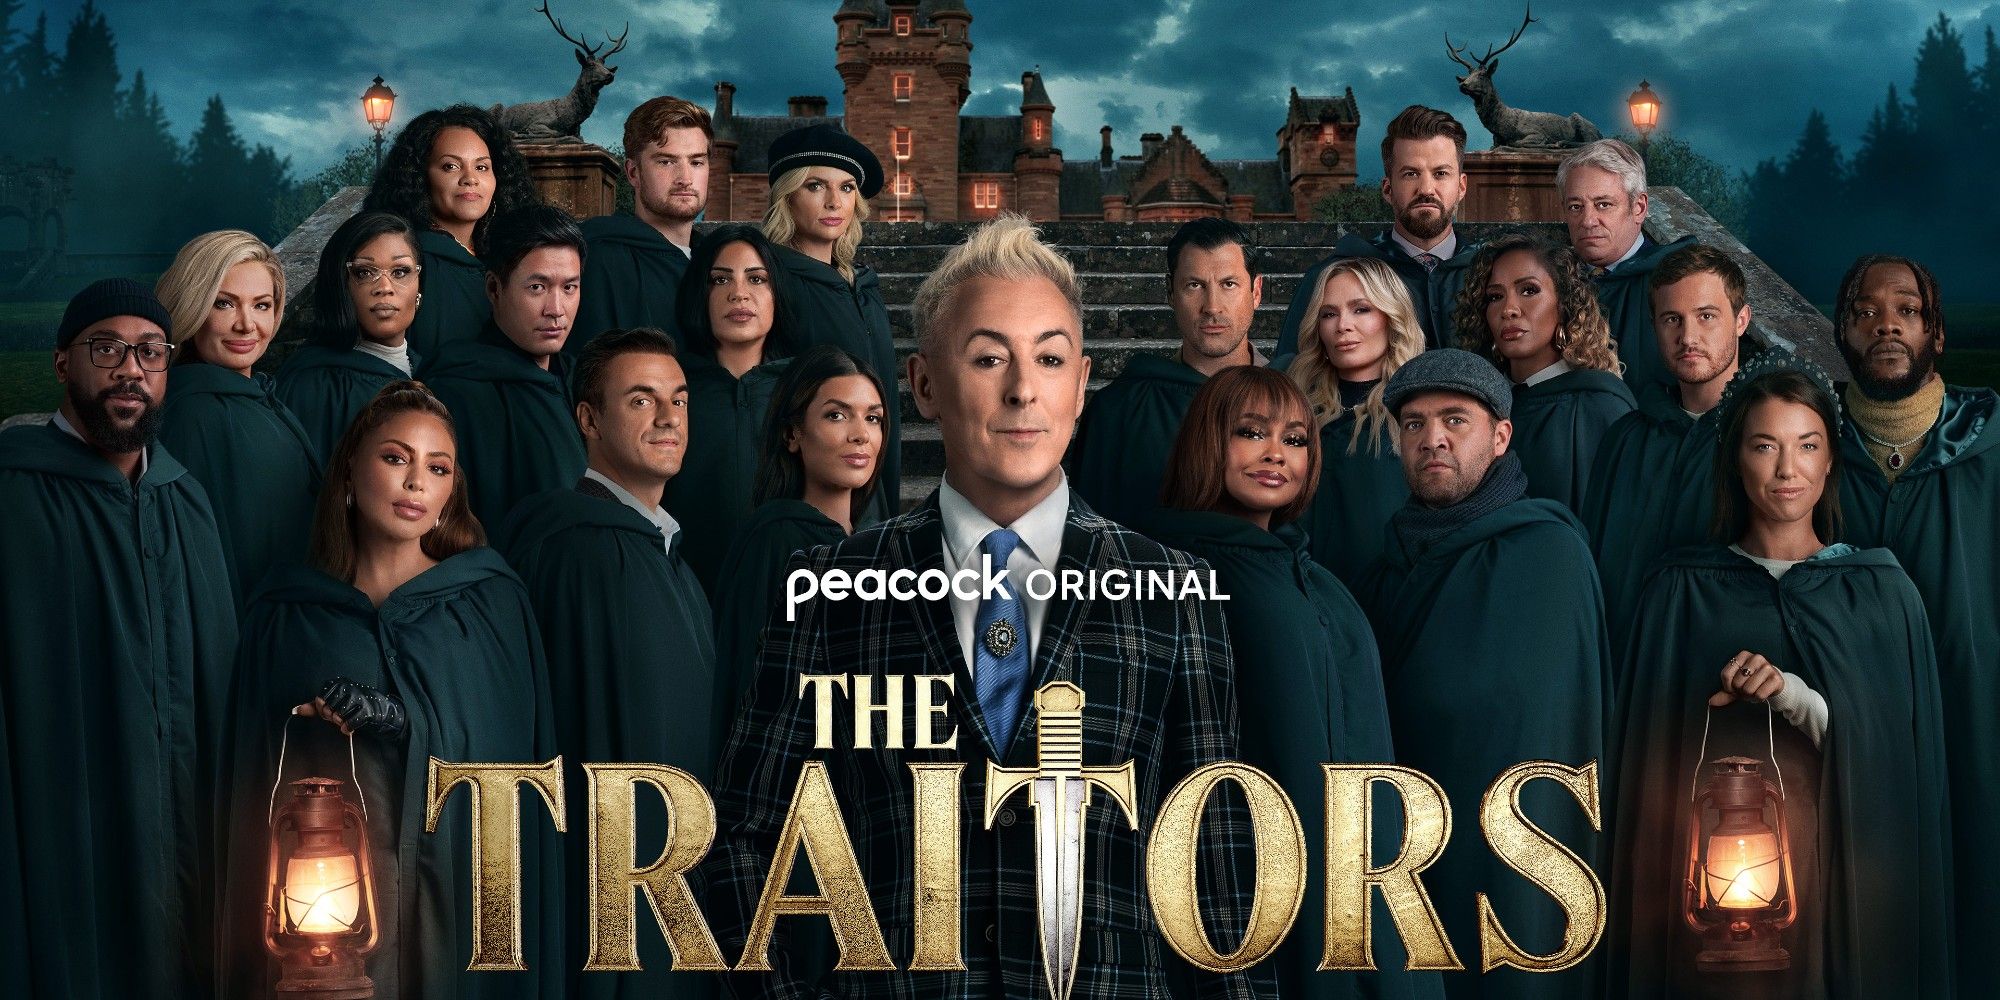 The Traitors US season 2 cast